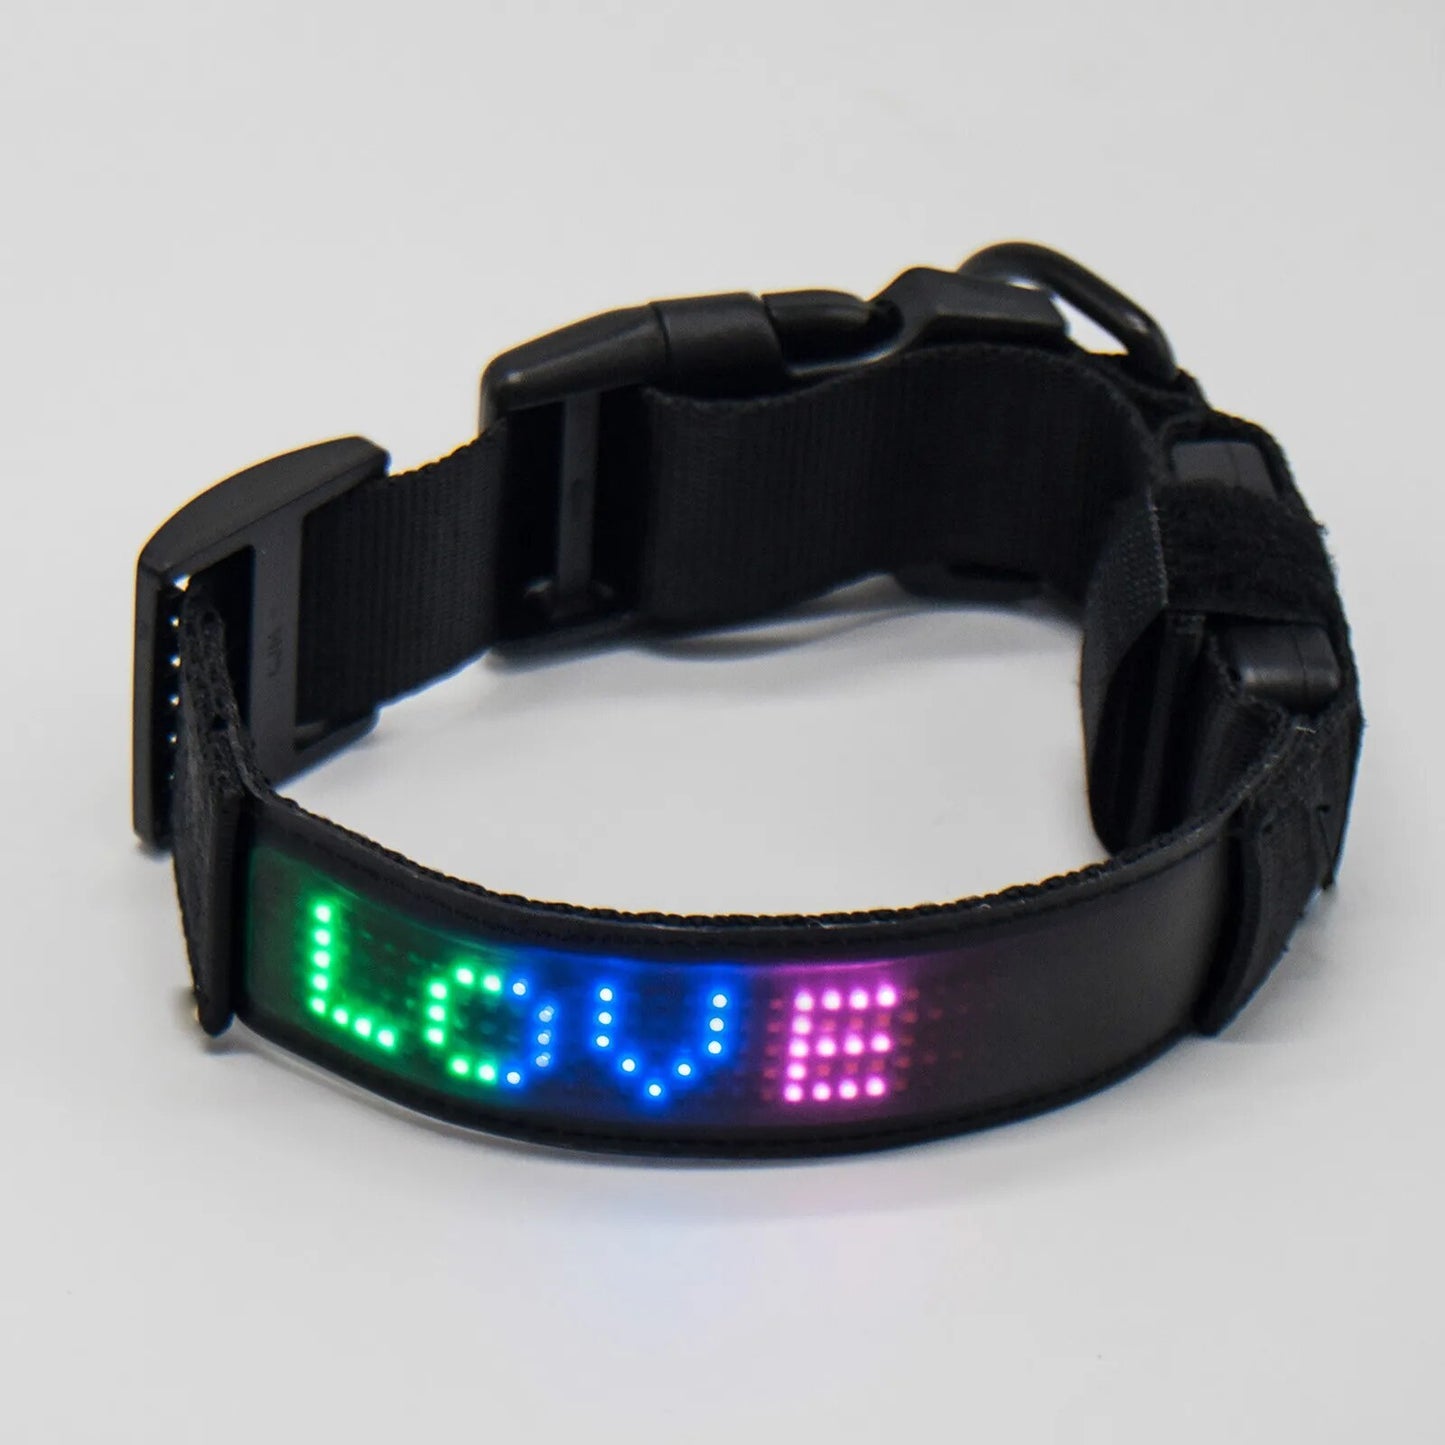 LED Display Pet Collar